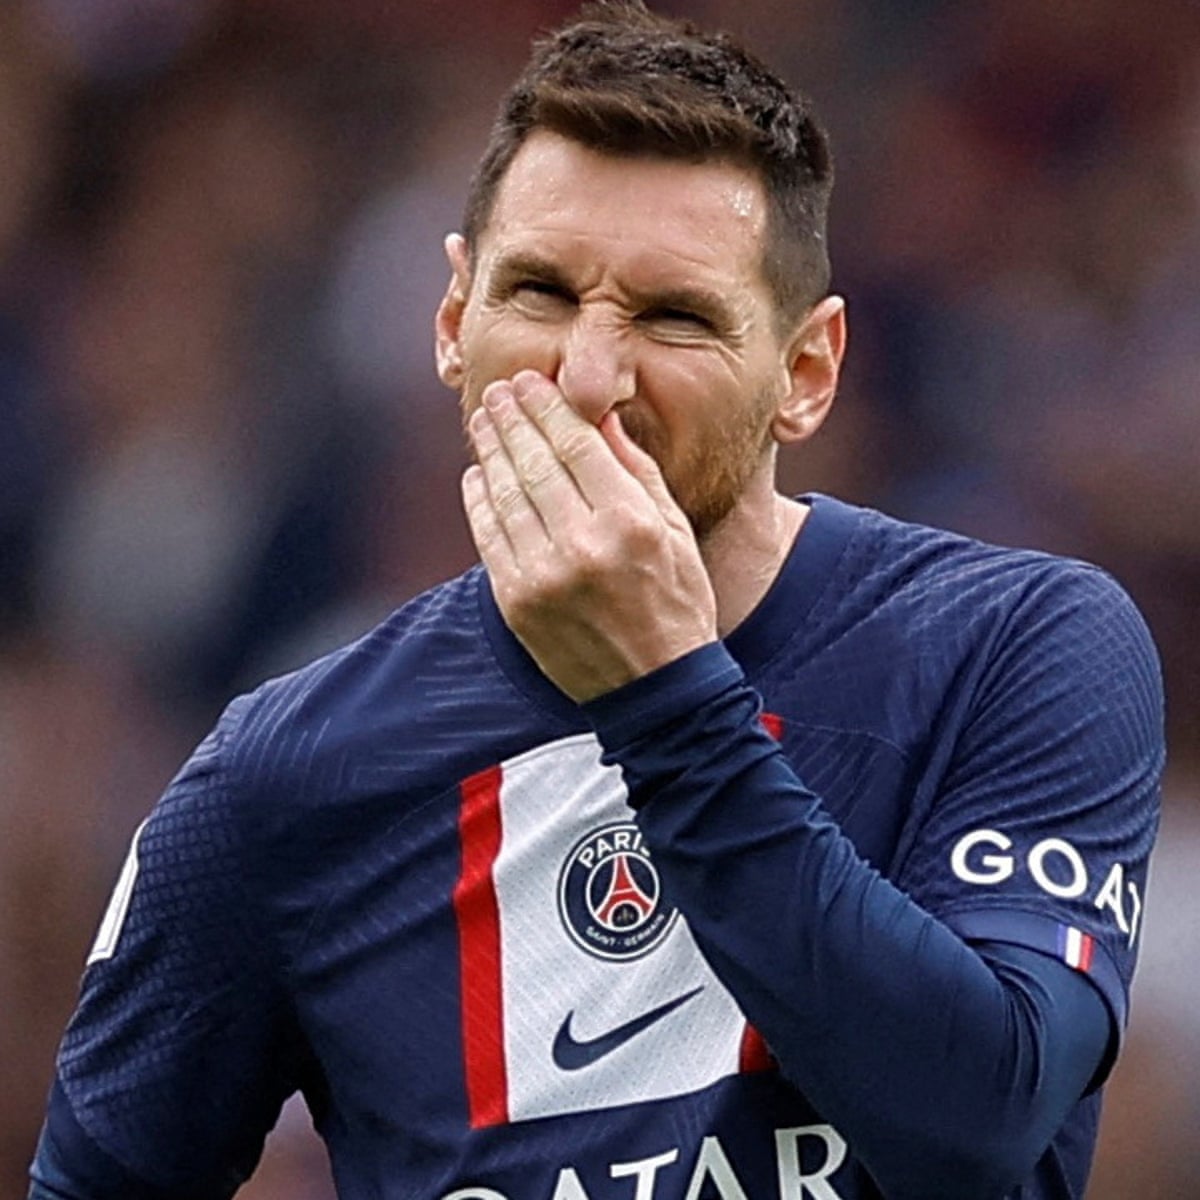 Lionel Messi back training with Paris Saint-Germain after suspension | Lionel Messi | The Guardian